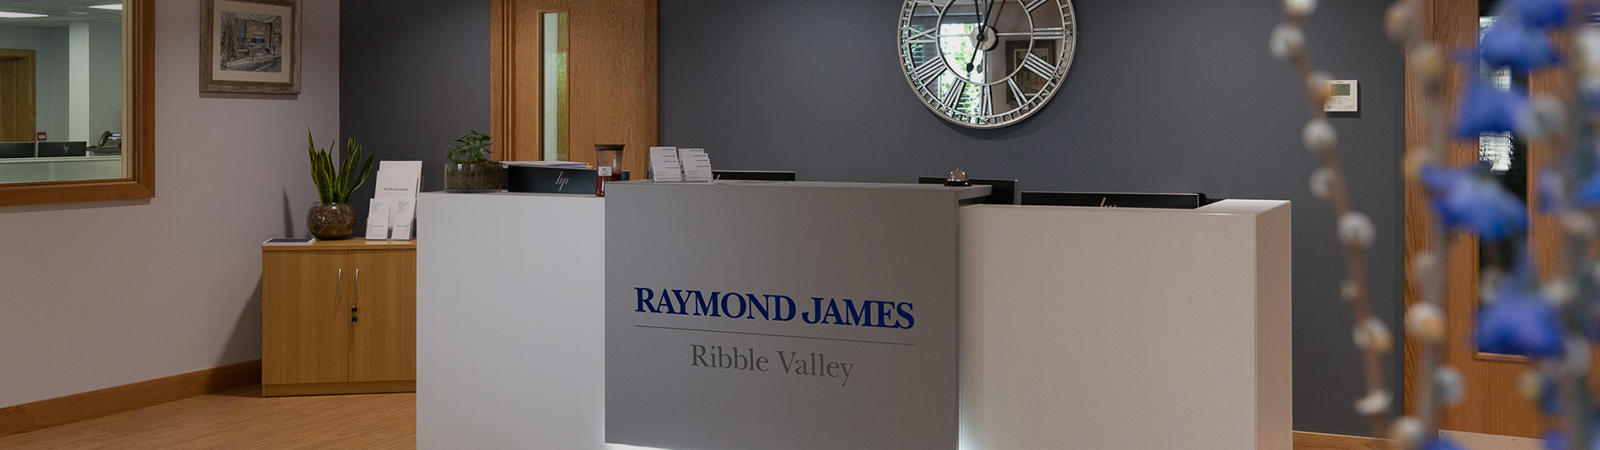 Raymond James Ribble Valley reception